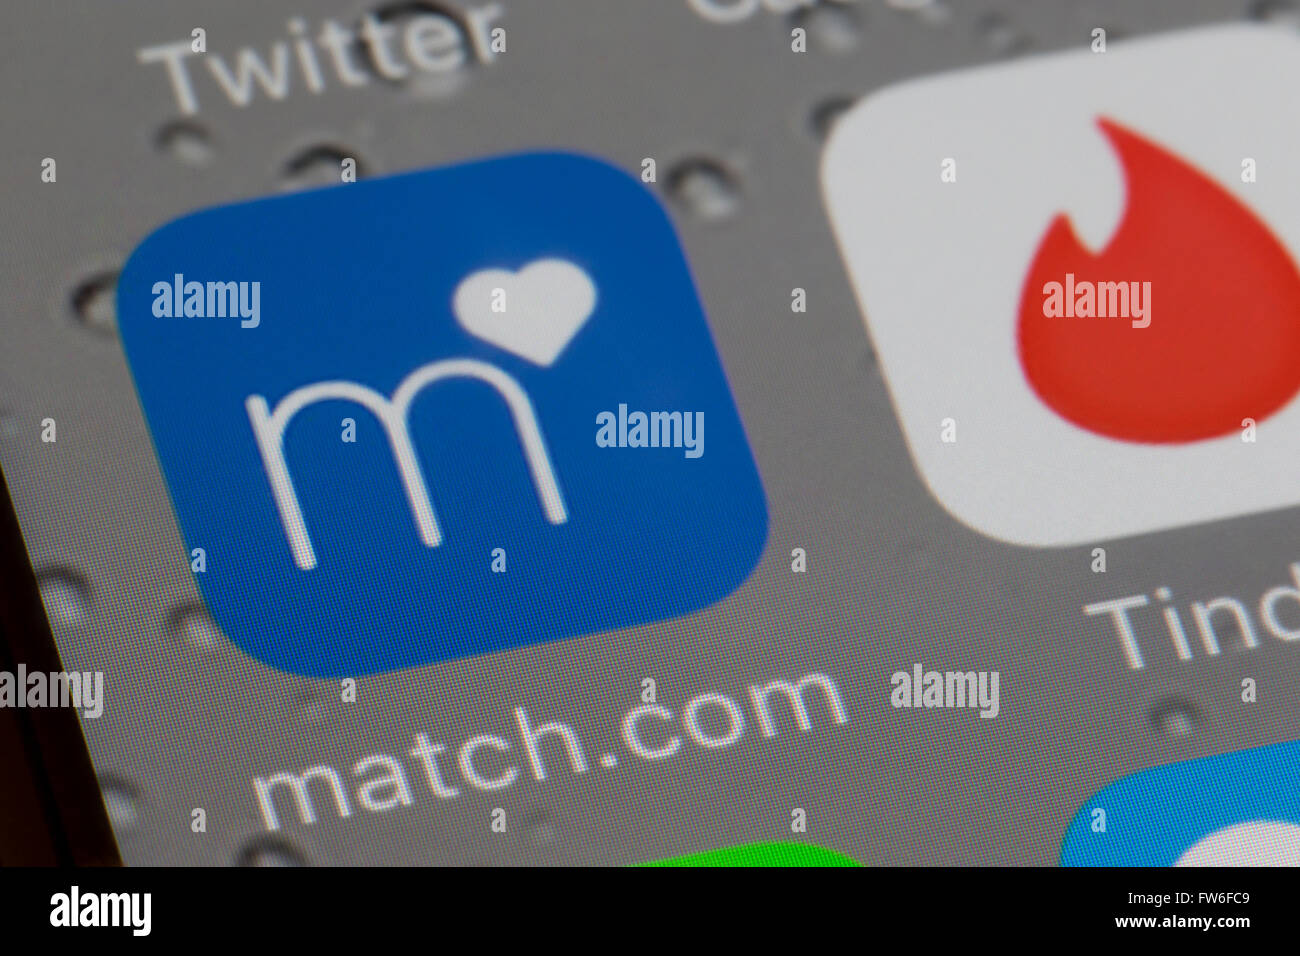 match.com internet dating app Stock Photo